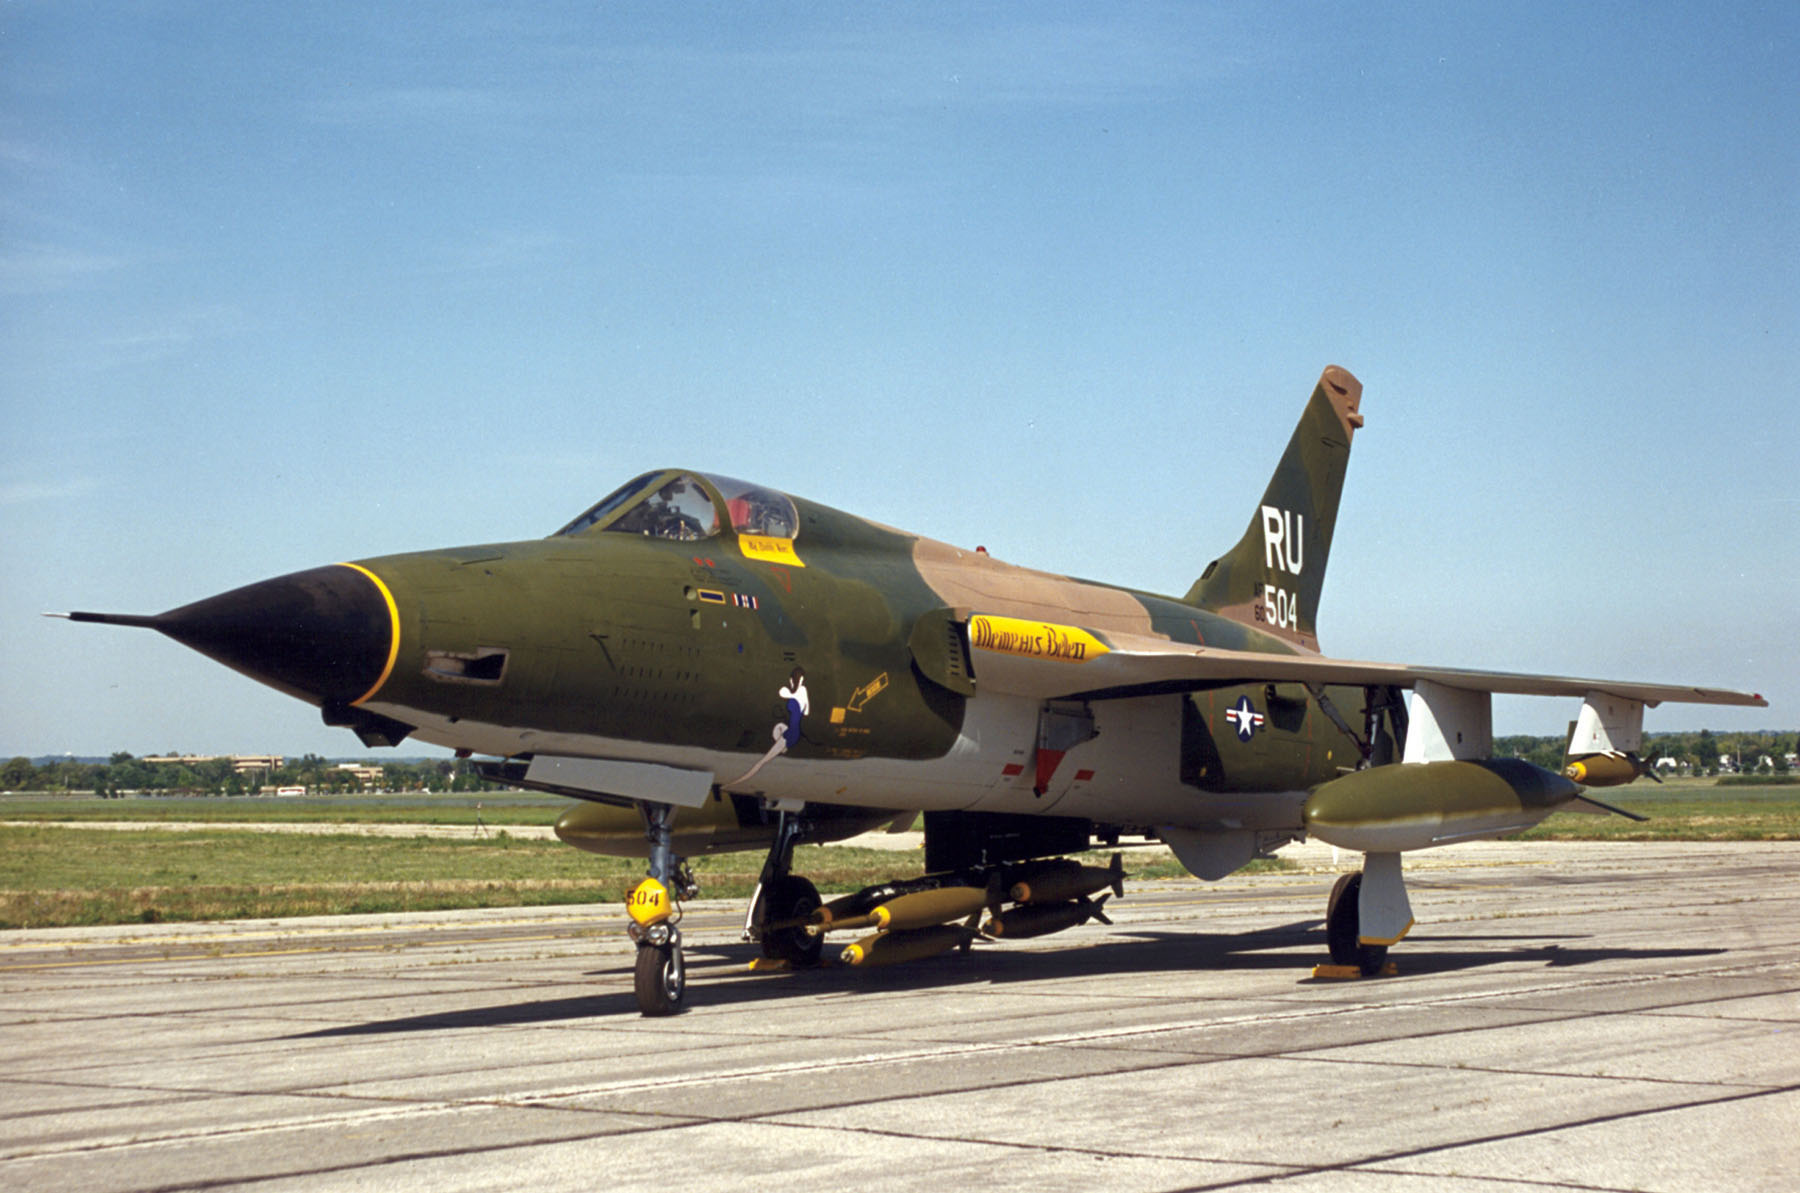 HQ Republic F-105 Thunderchief Wallpapers | File 255.22Kb